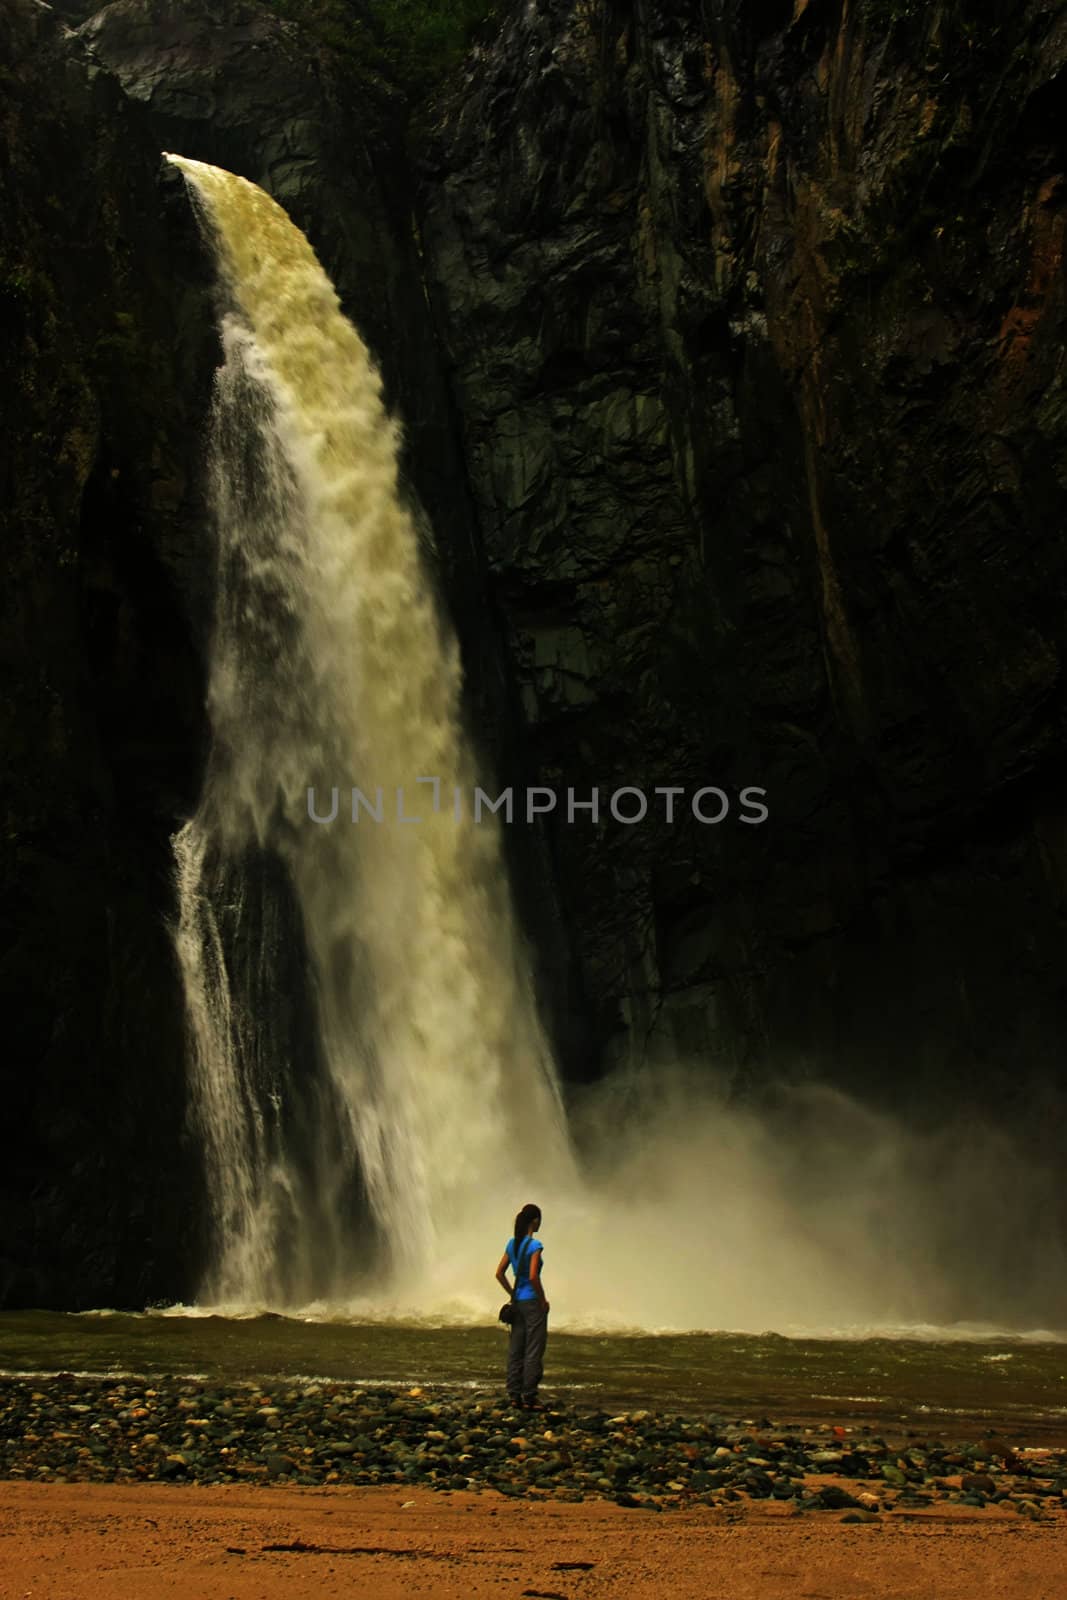 Salto Jimenoa Uno waterfall, Jarabacoa, Dominican Republic